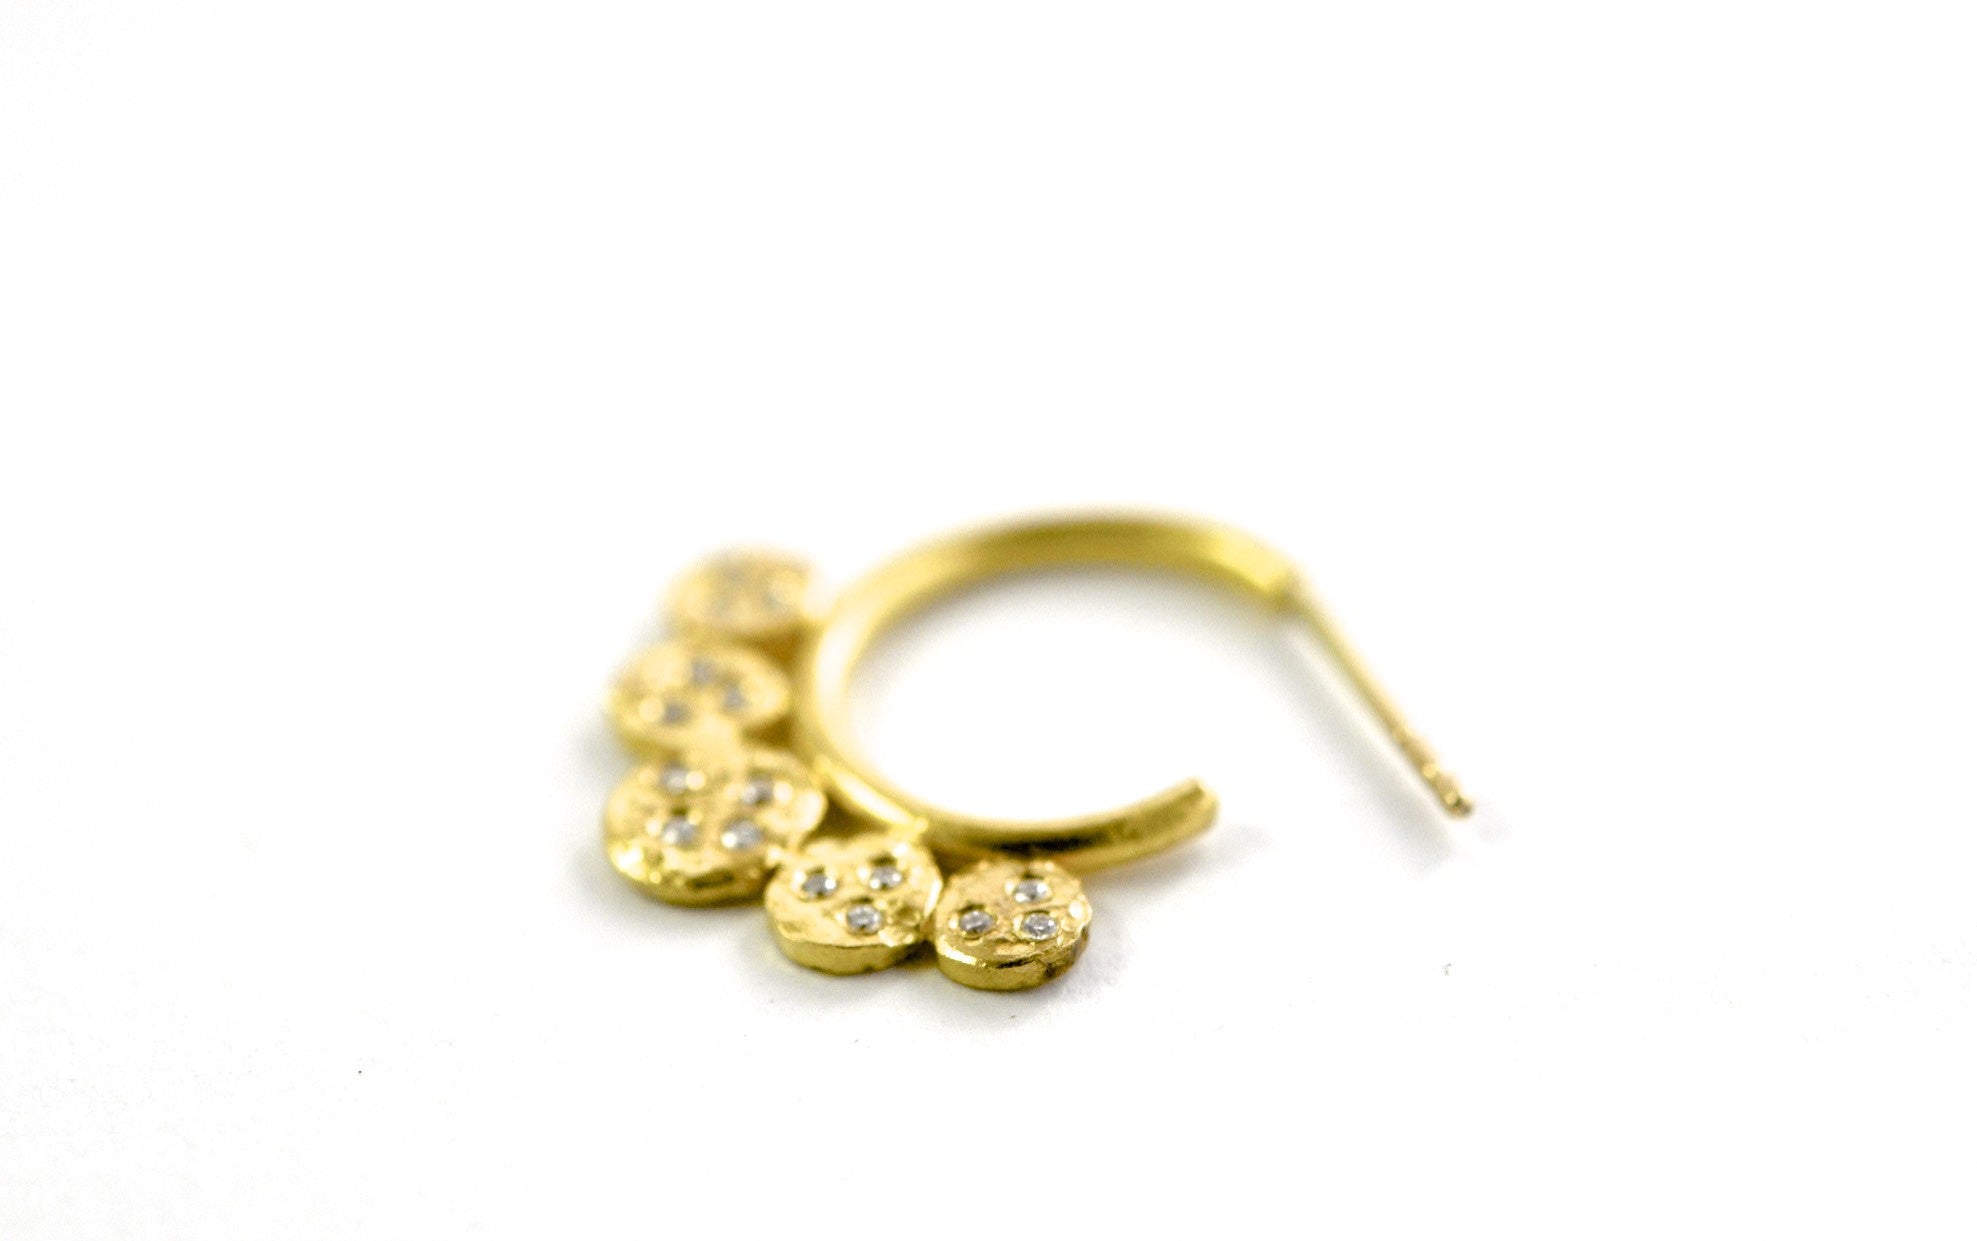 earrings / gold hammered  22k + diamonds hoops